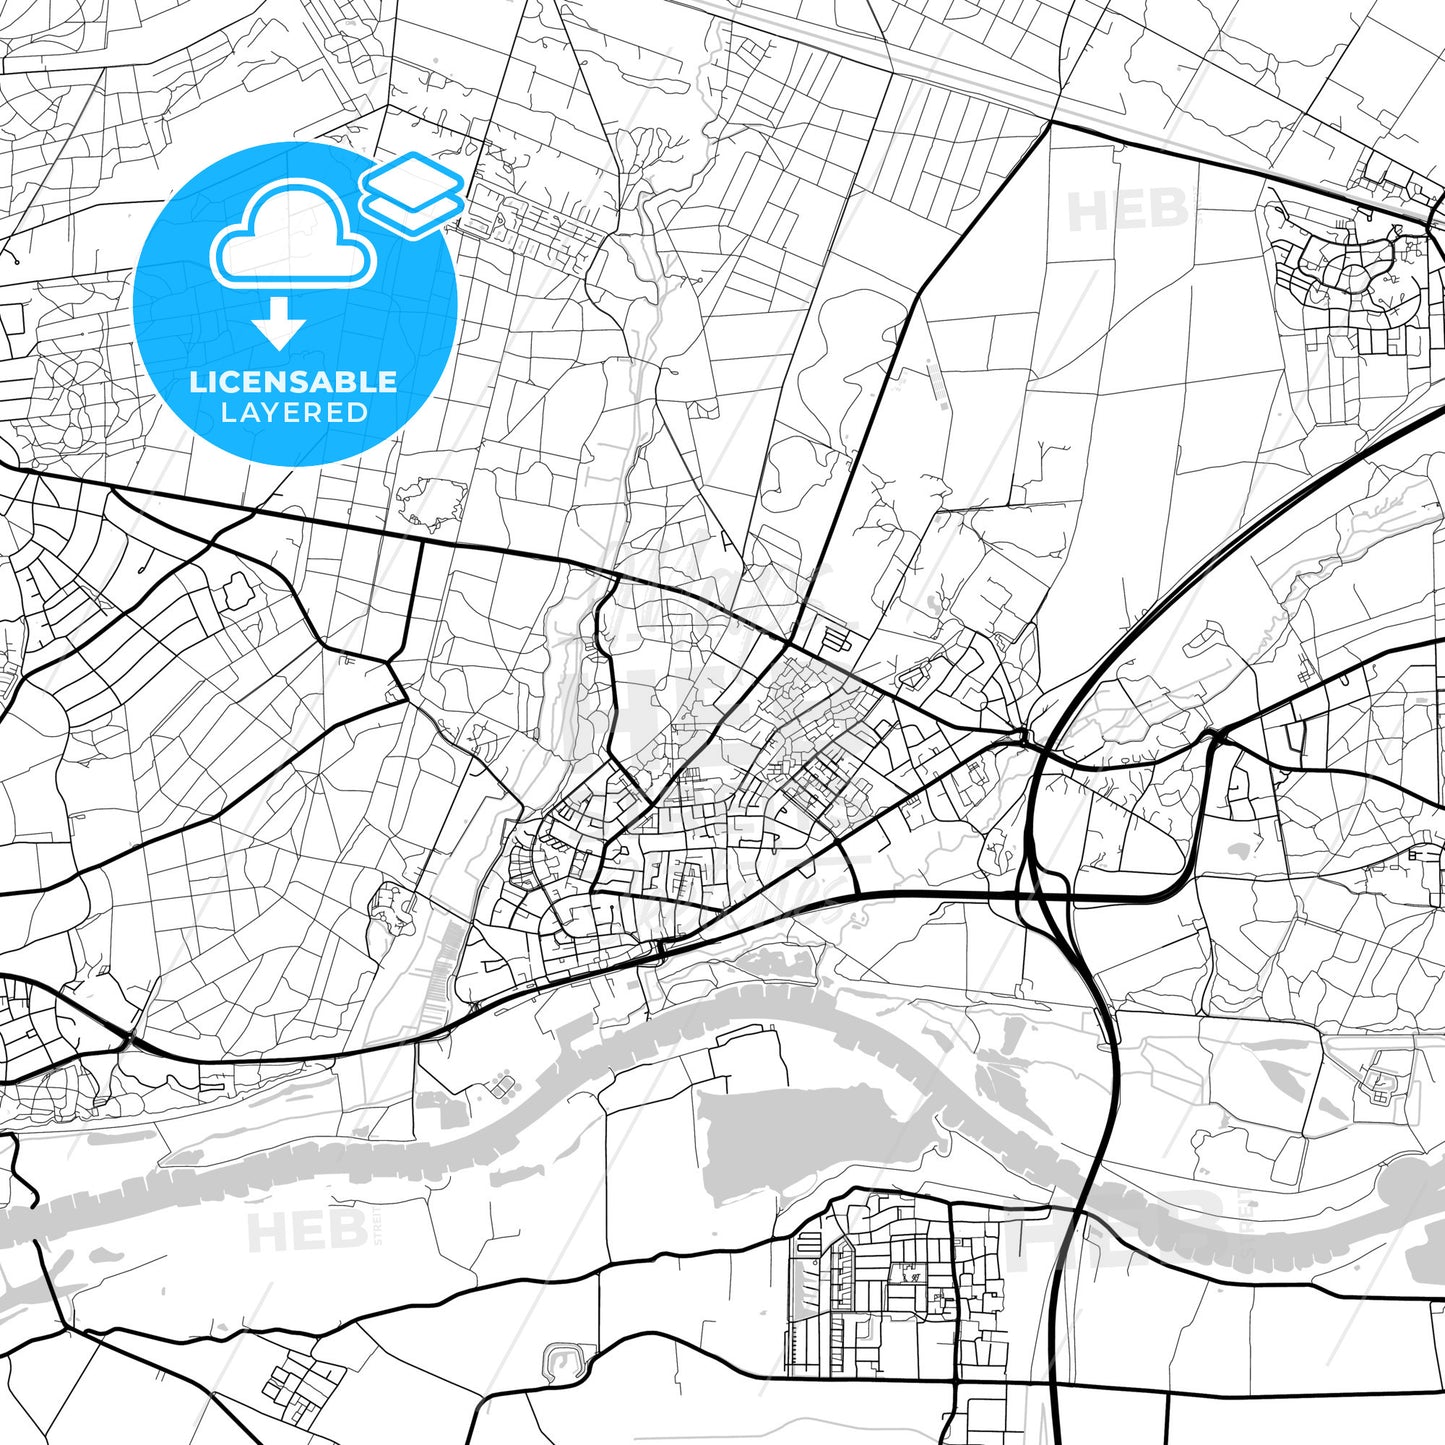 Layered PDF map of Renkum, Gelderland, Netherlands